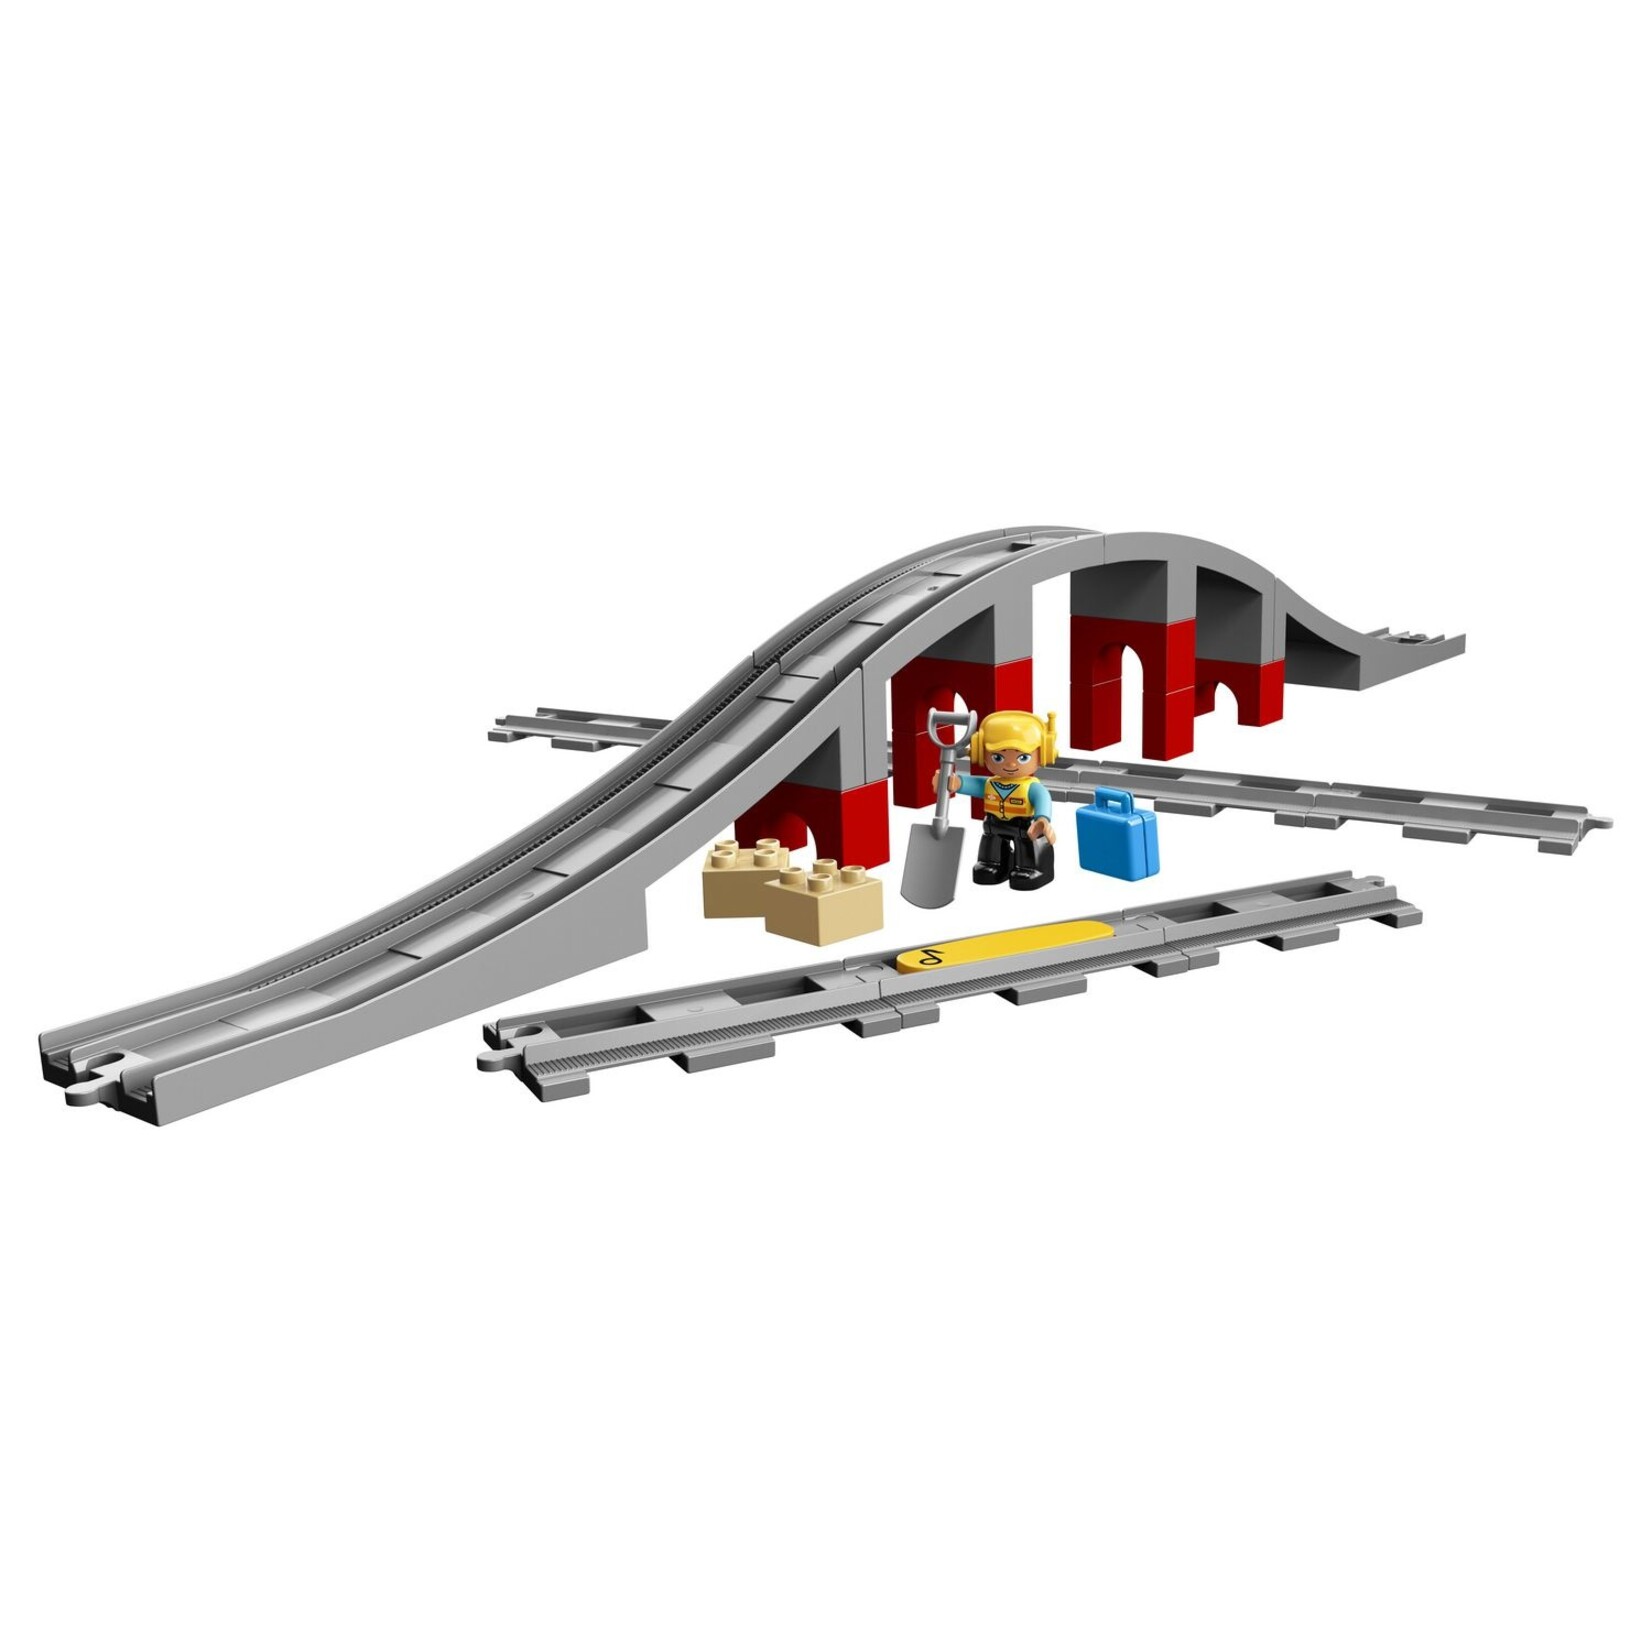 LEGO Duplo - train bridge and tracks